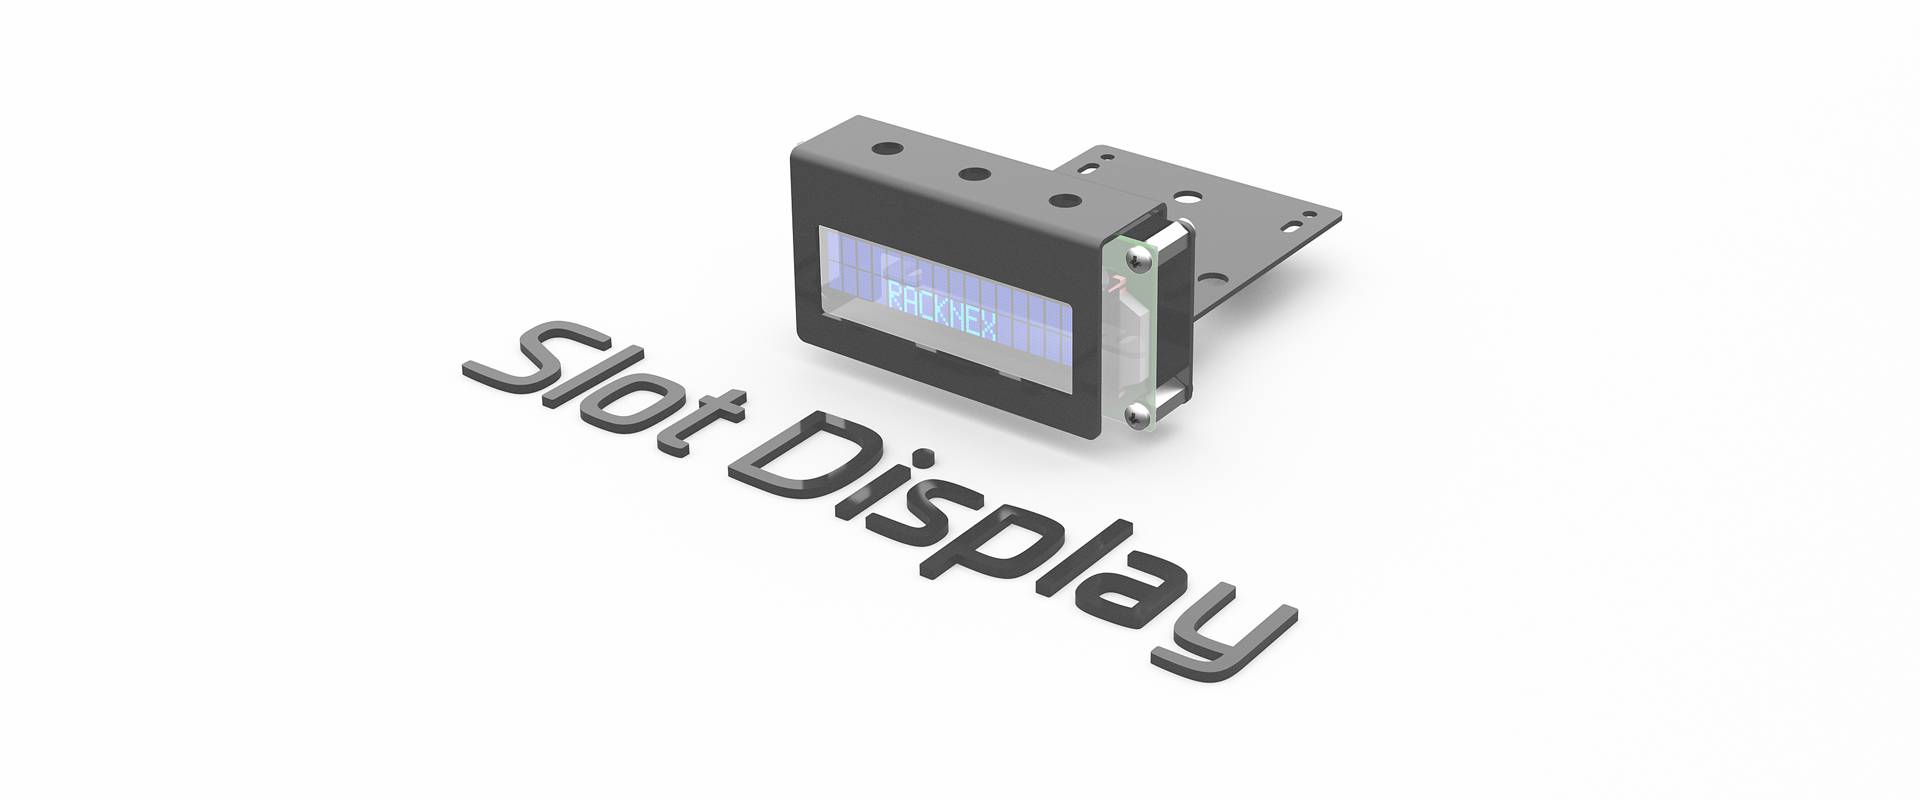 16x2 LCD Slot Display